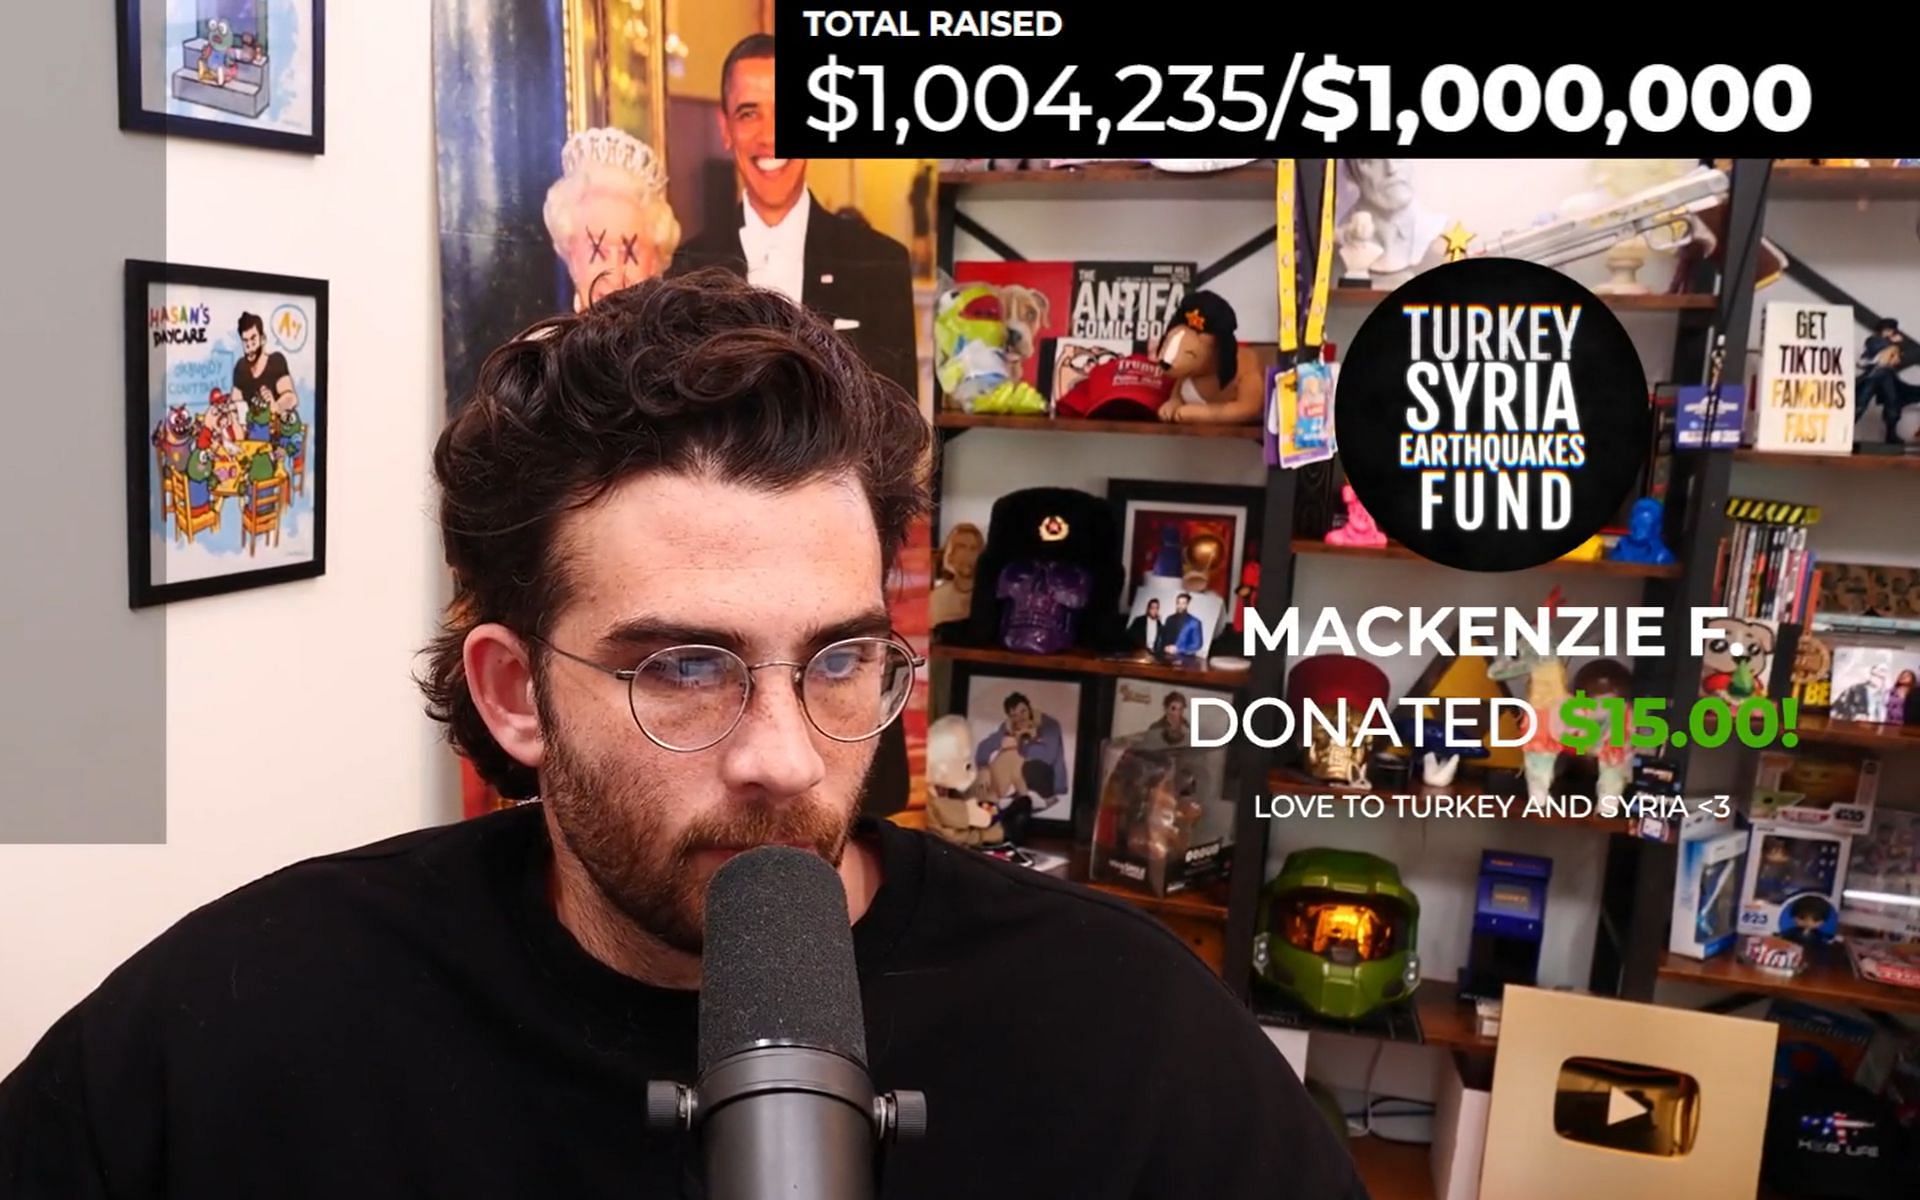 HasanAbi helped raise over $1,000,000 for the Turkey-Syria Earthquake Relief (Image via HasanAbi/Twitch)